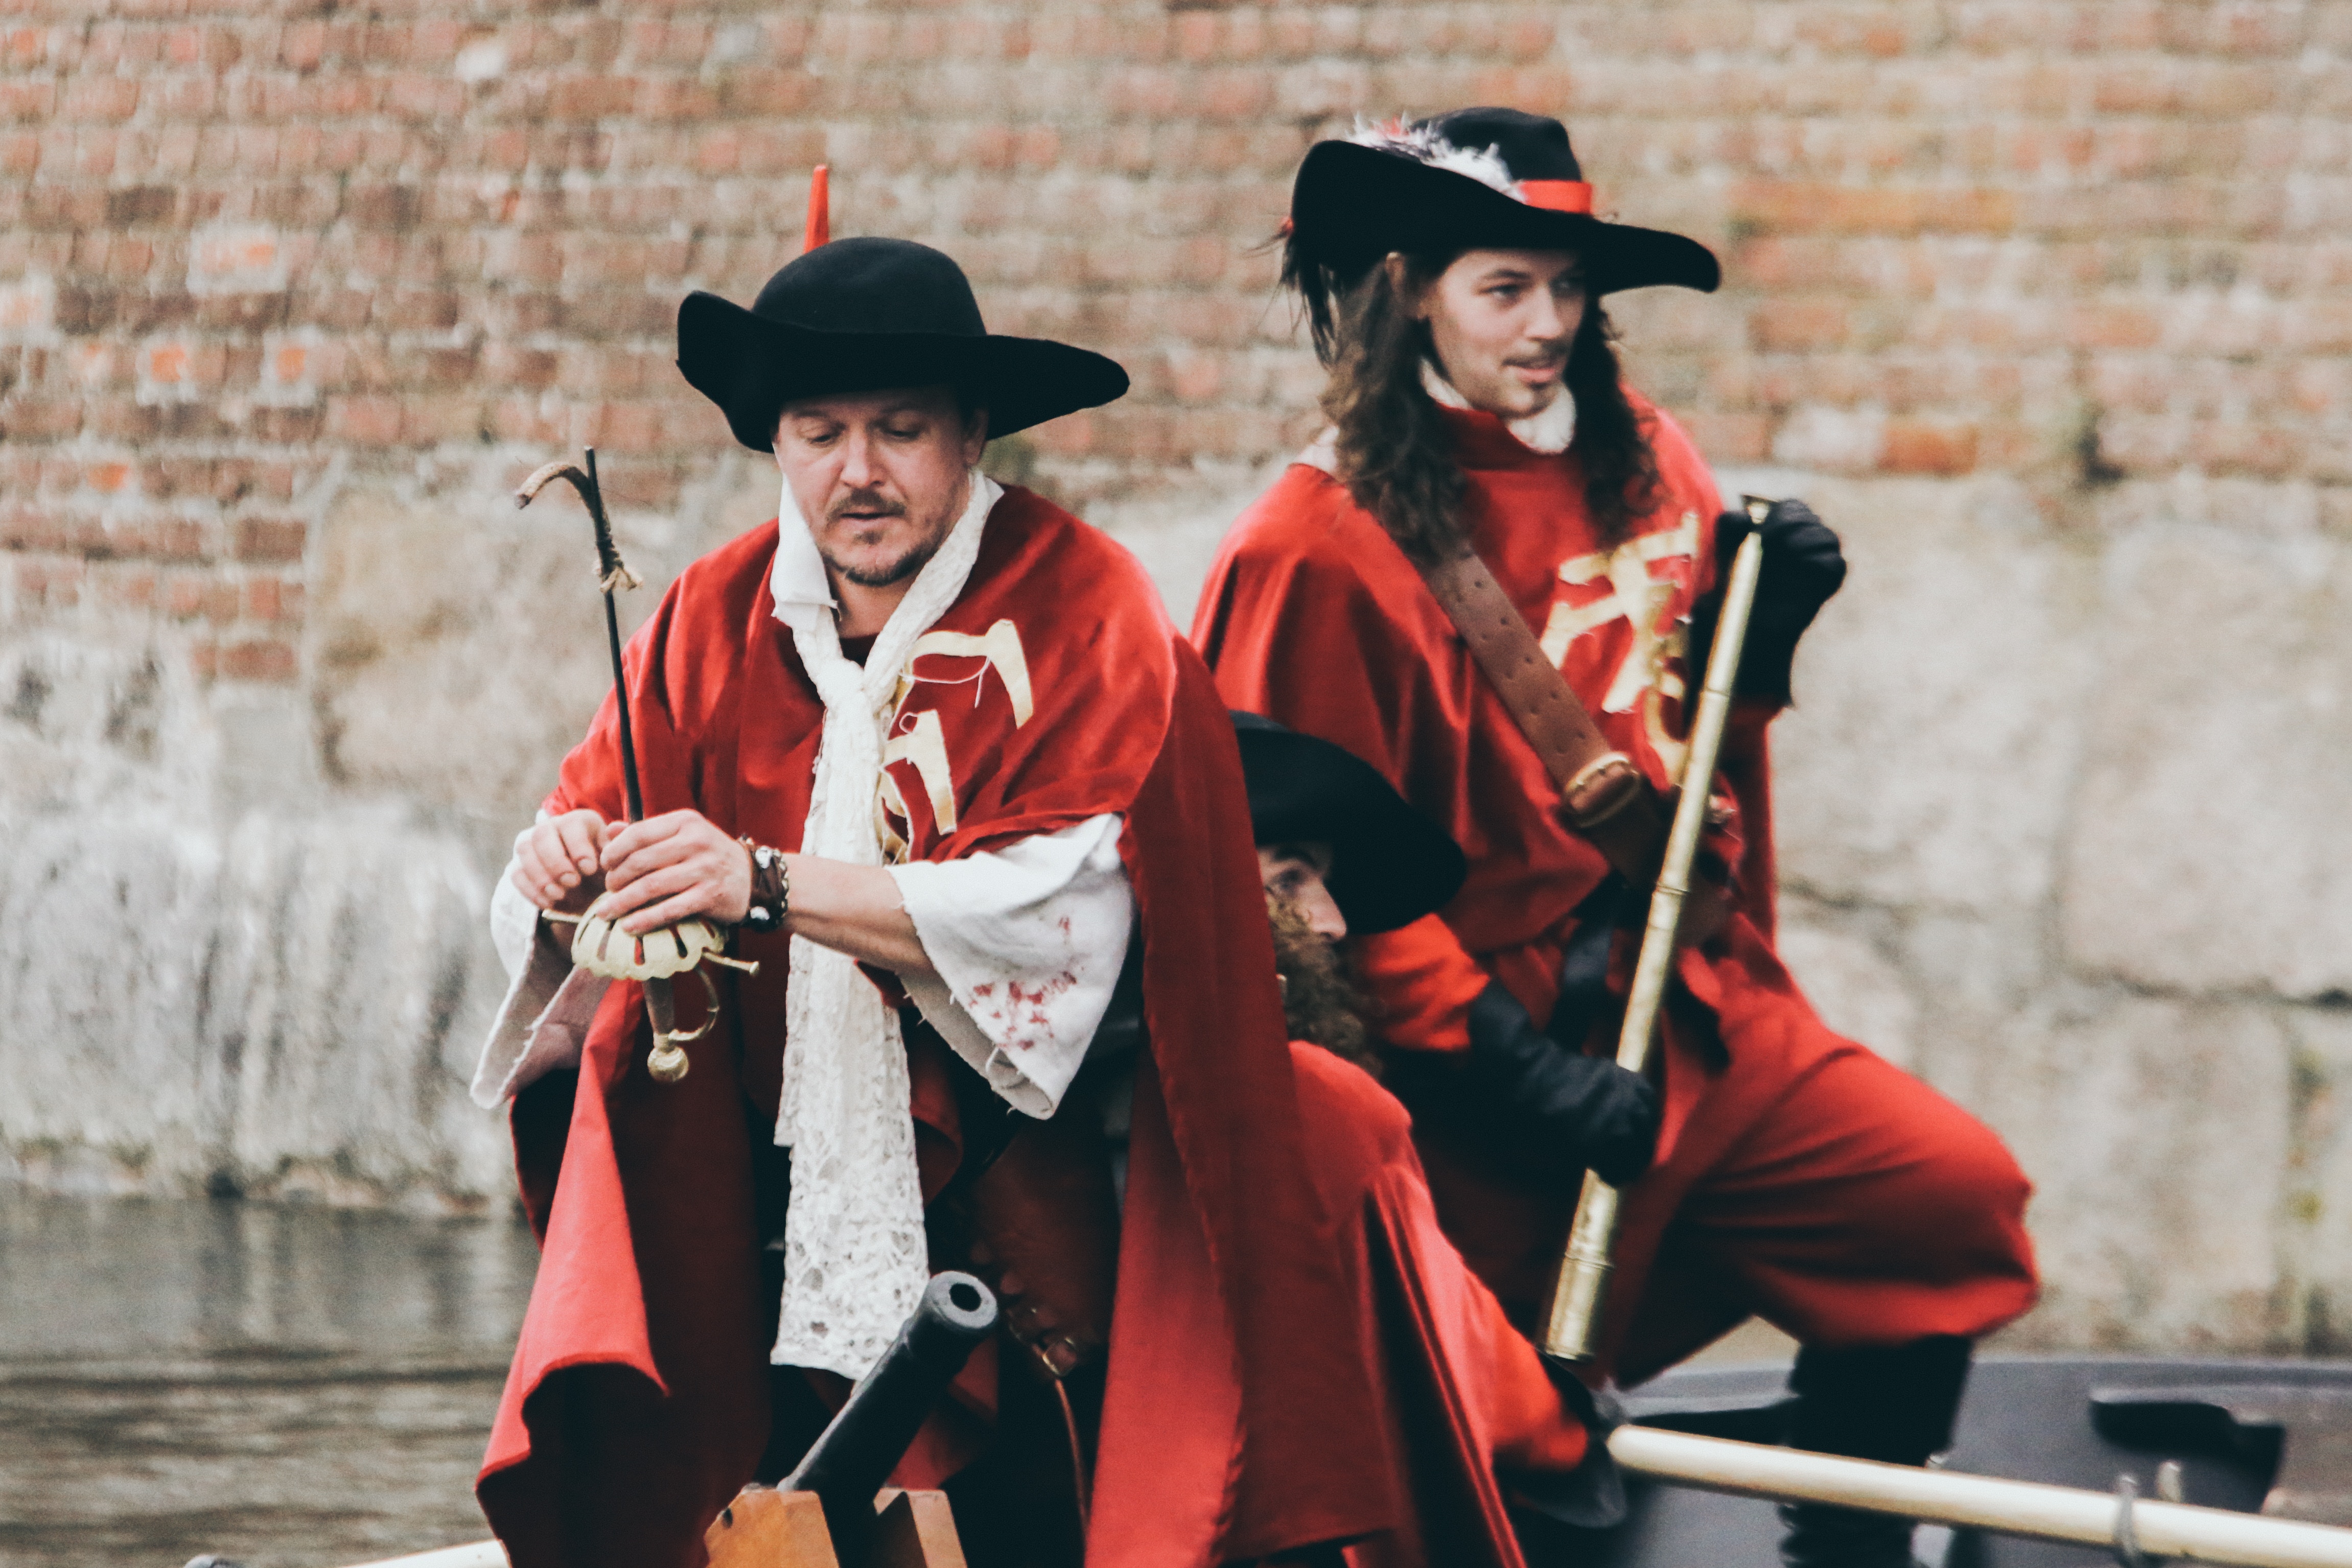 Pirates in a red costume